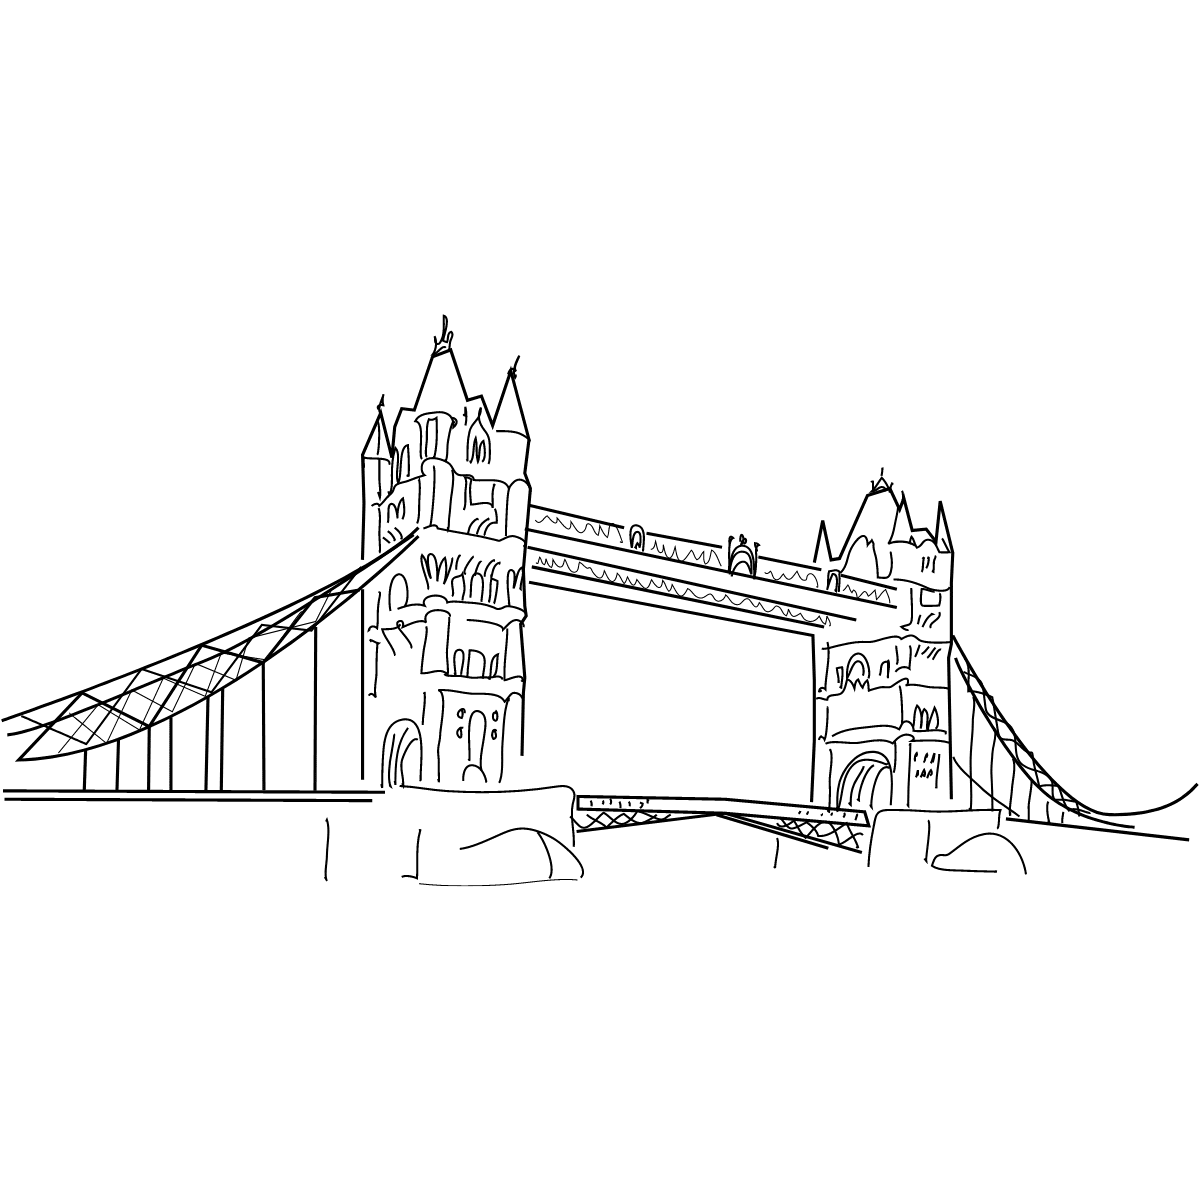 London Bridge coloring page